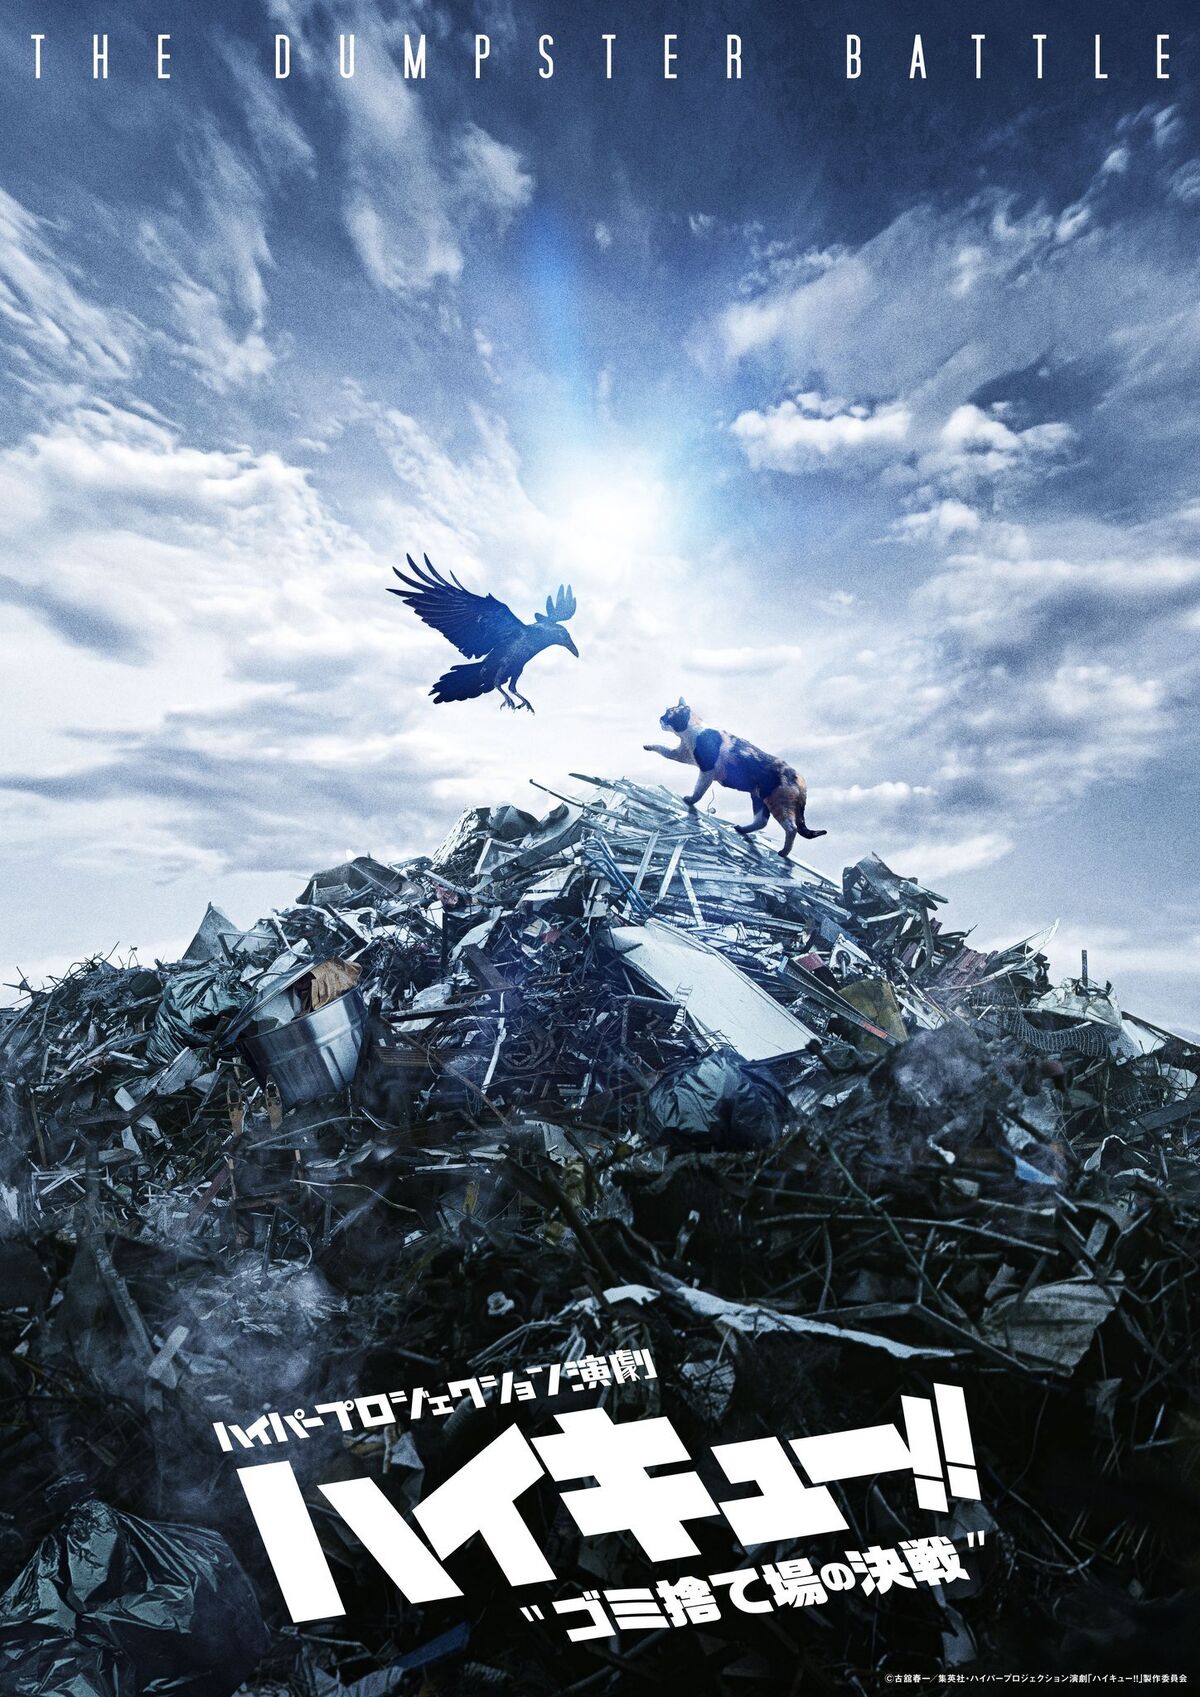 Haikyuu!! Movie: Battle of the Garbage Dump - Exclusive Trailer #2